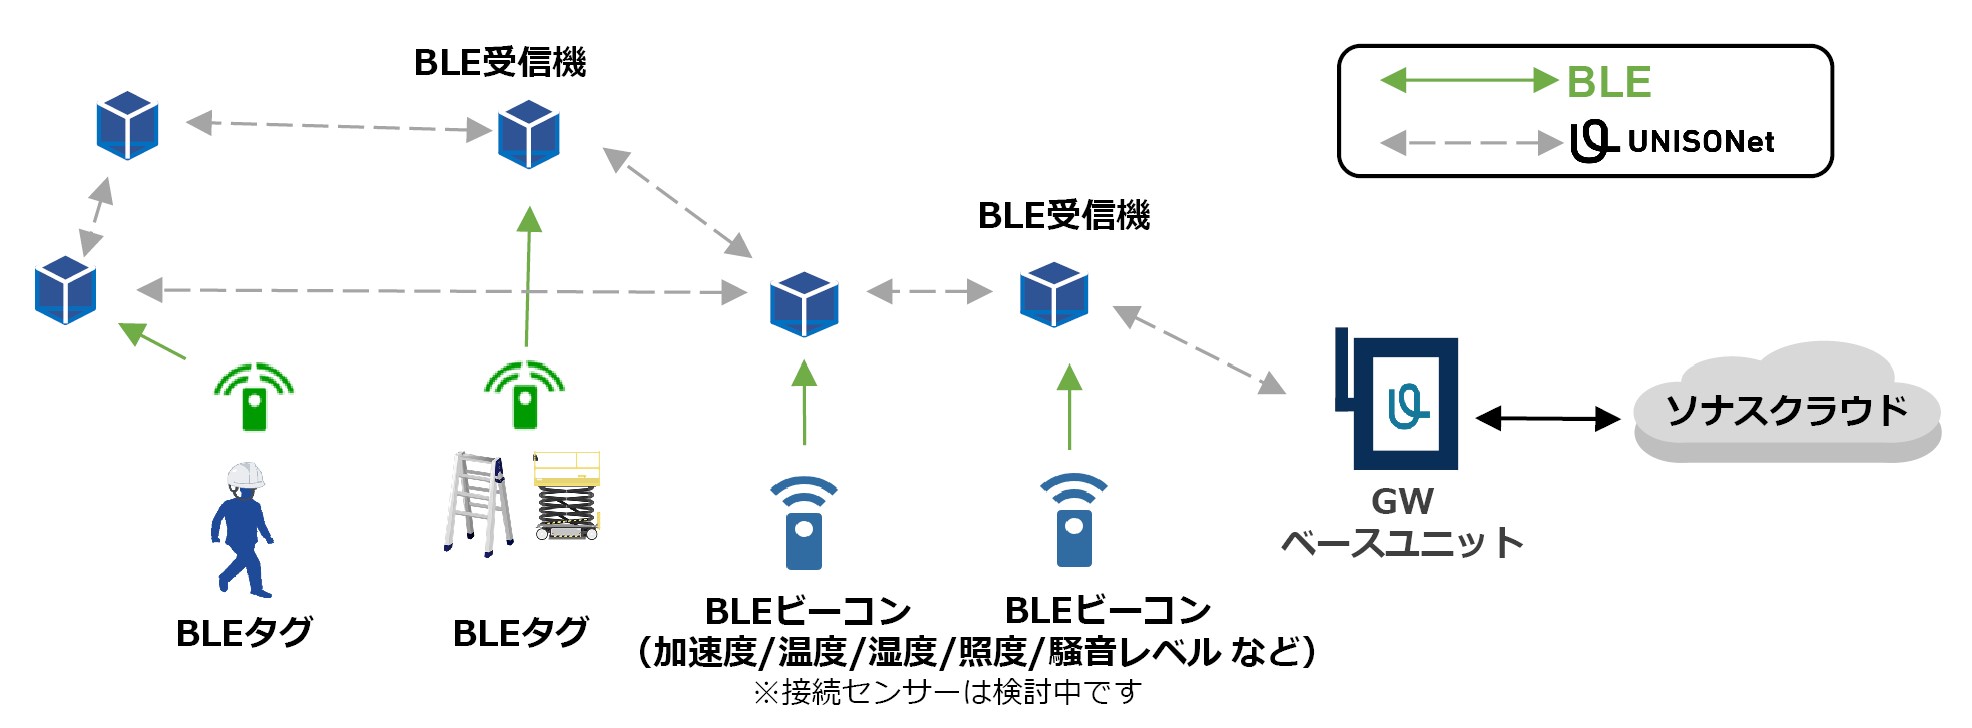 【BLE：システム構成】位置測定＋多様なBLEセンサと接続可能